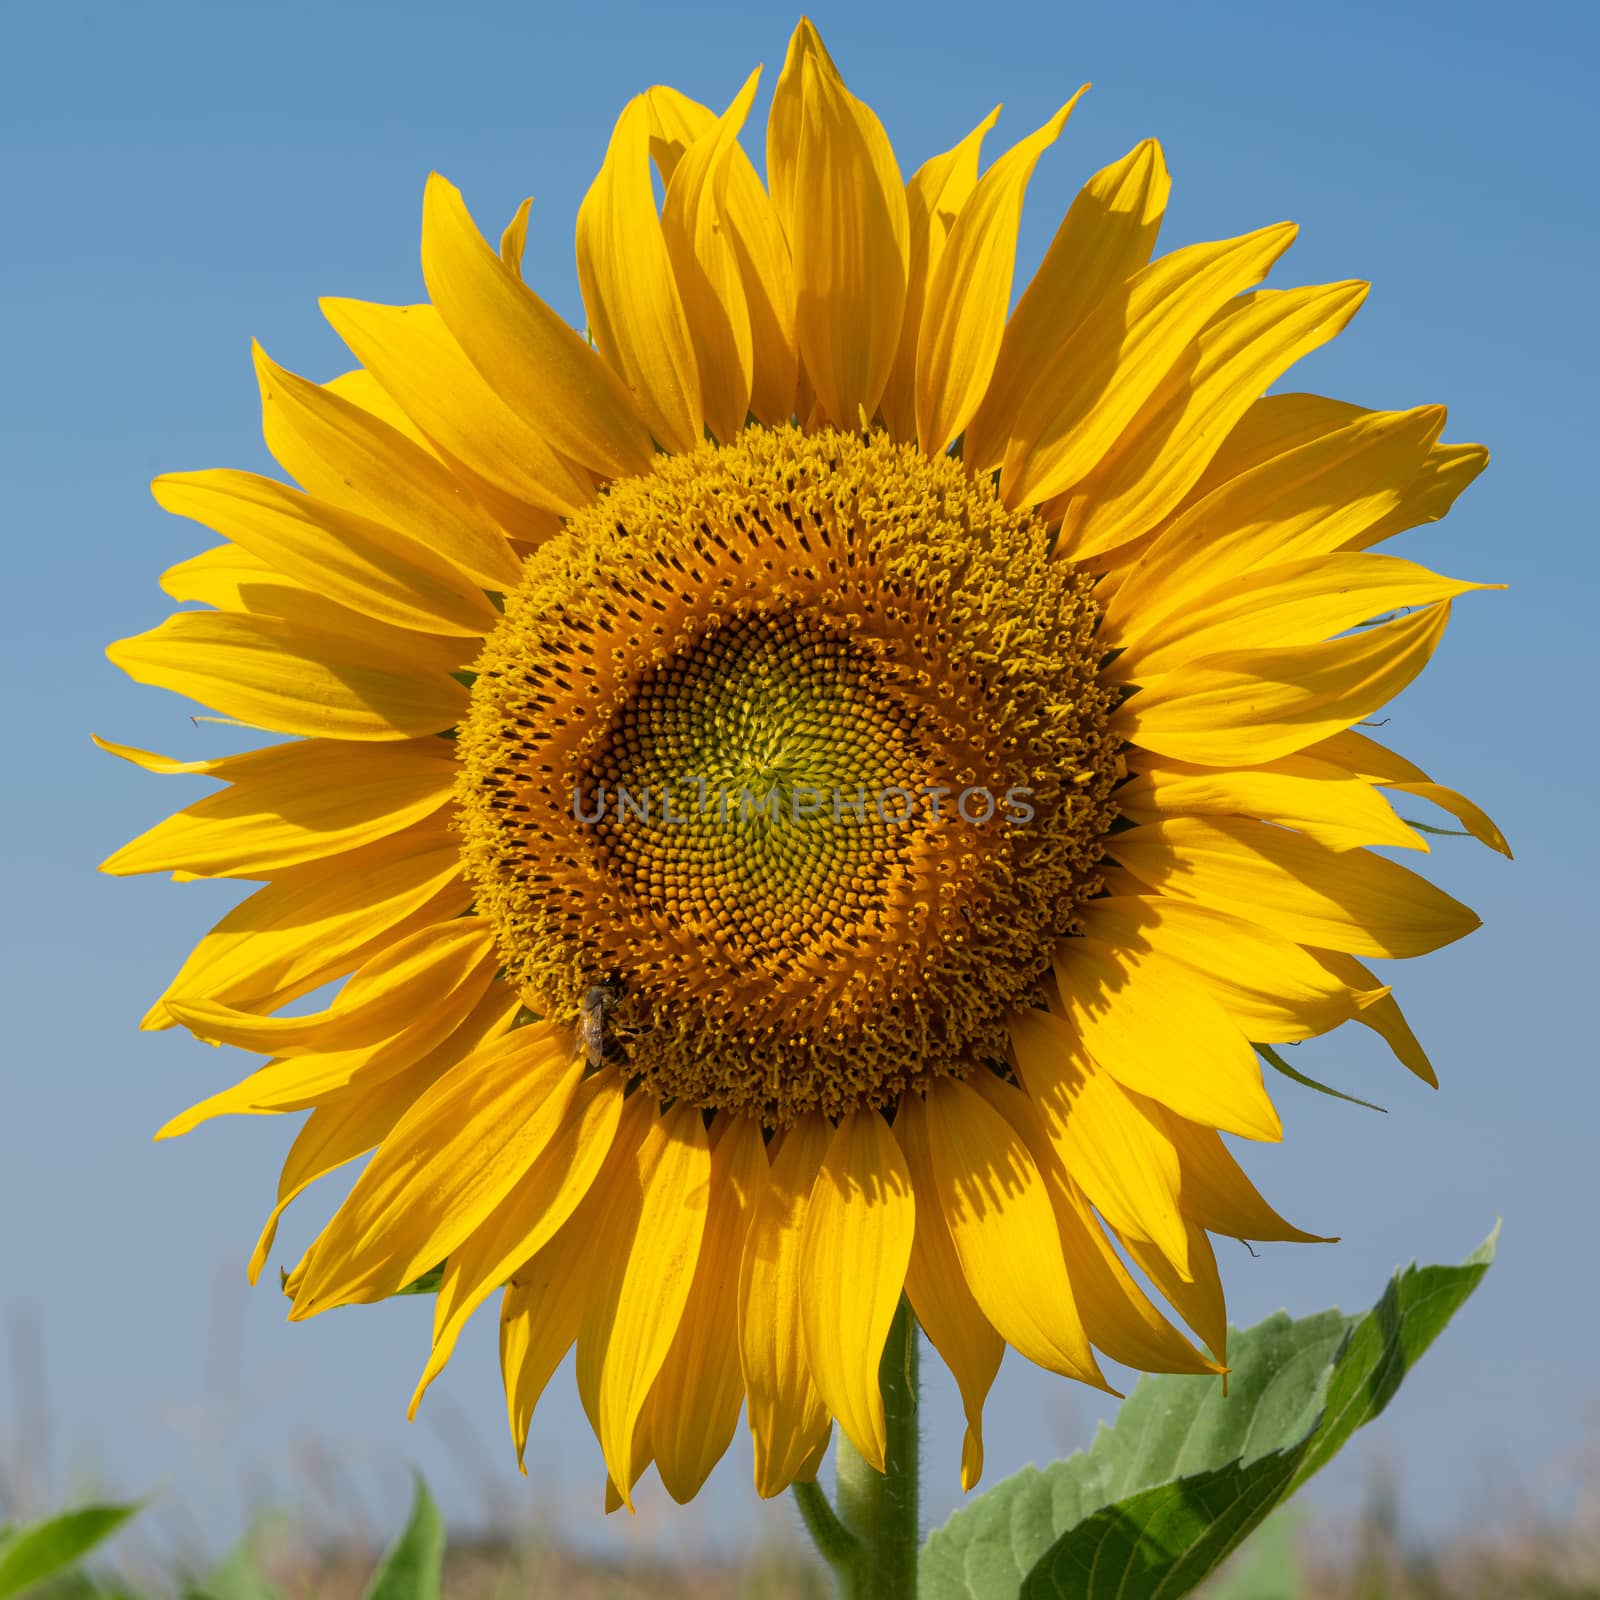 Sunflower (Helianthus annuus), close up of the flower head